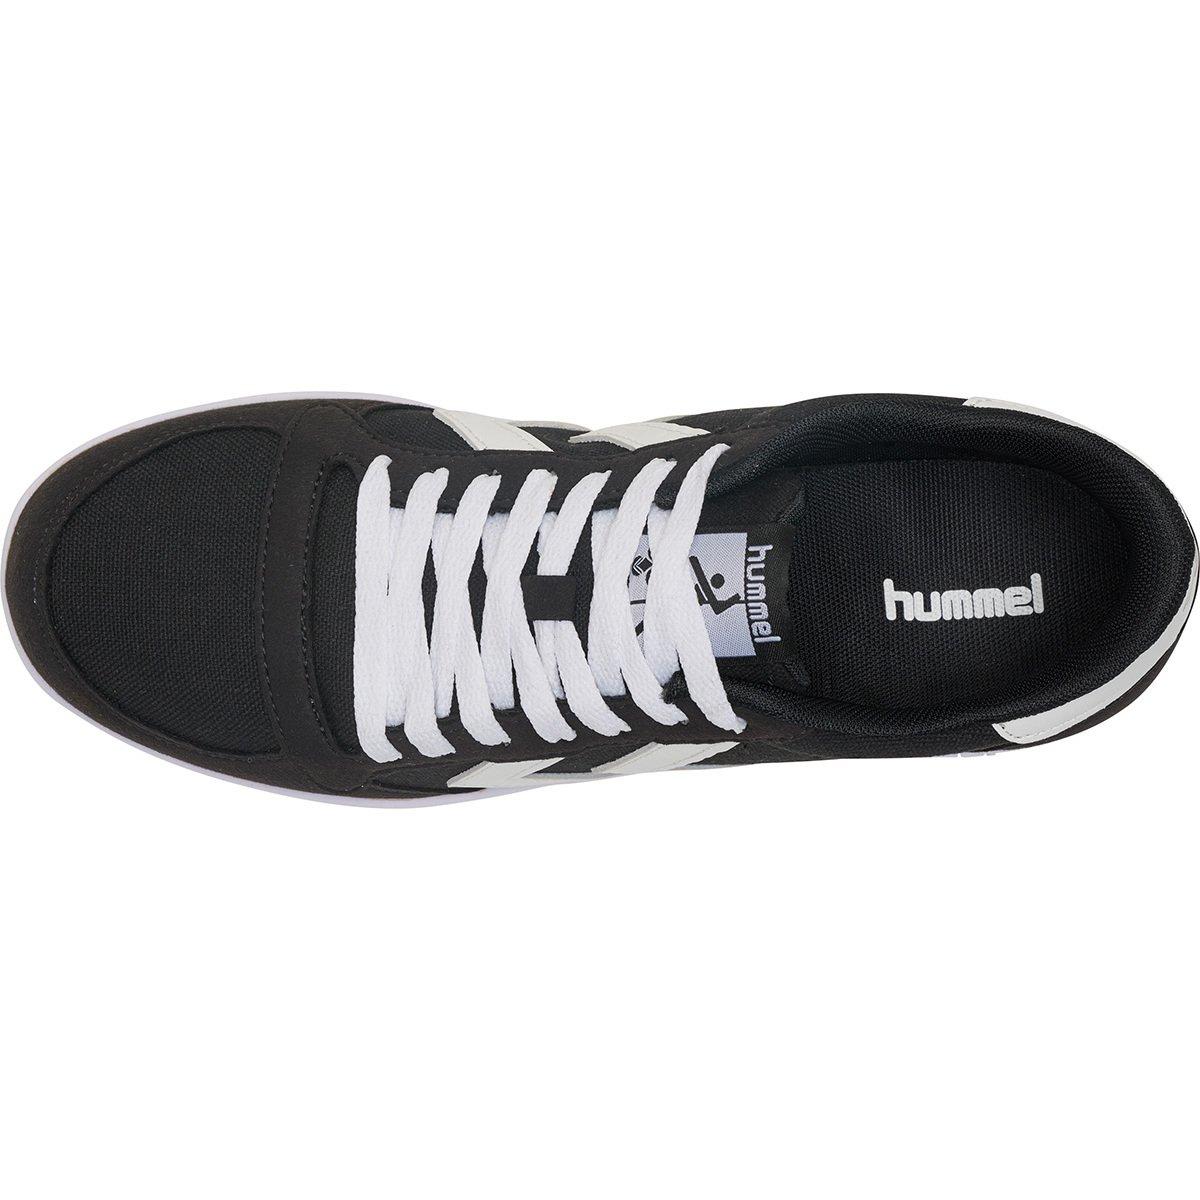 Hummel  sneakers stadil light canvas 